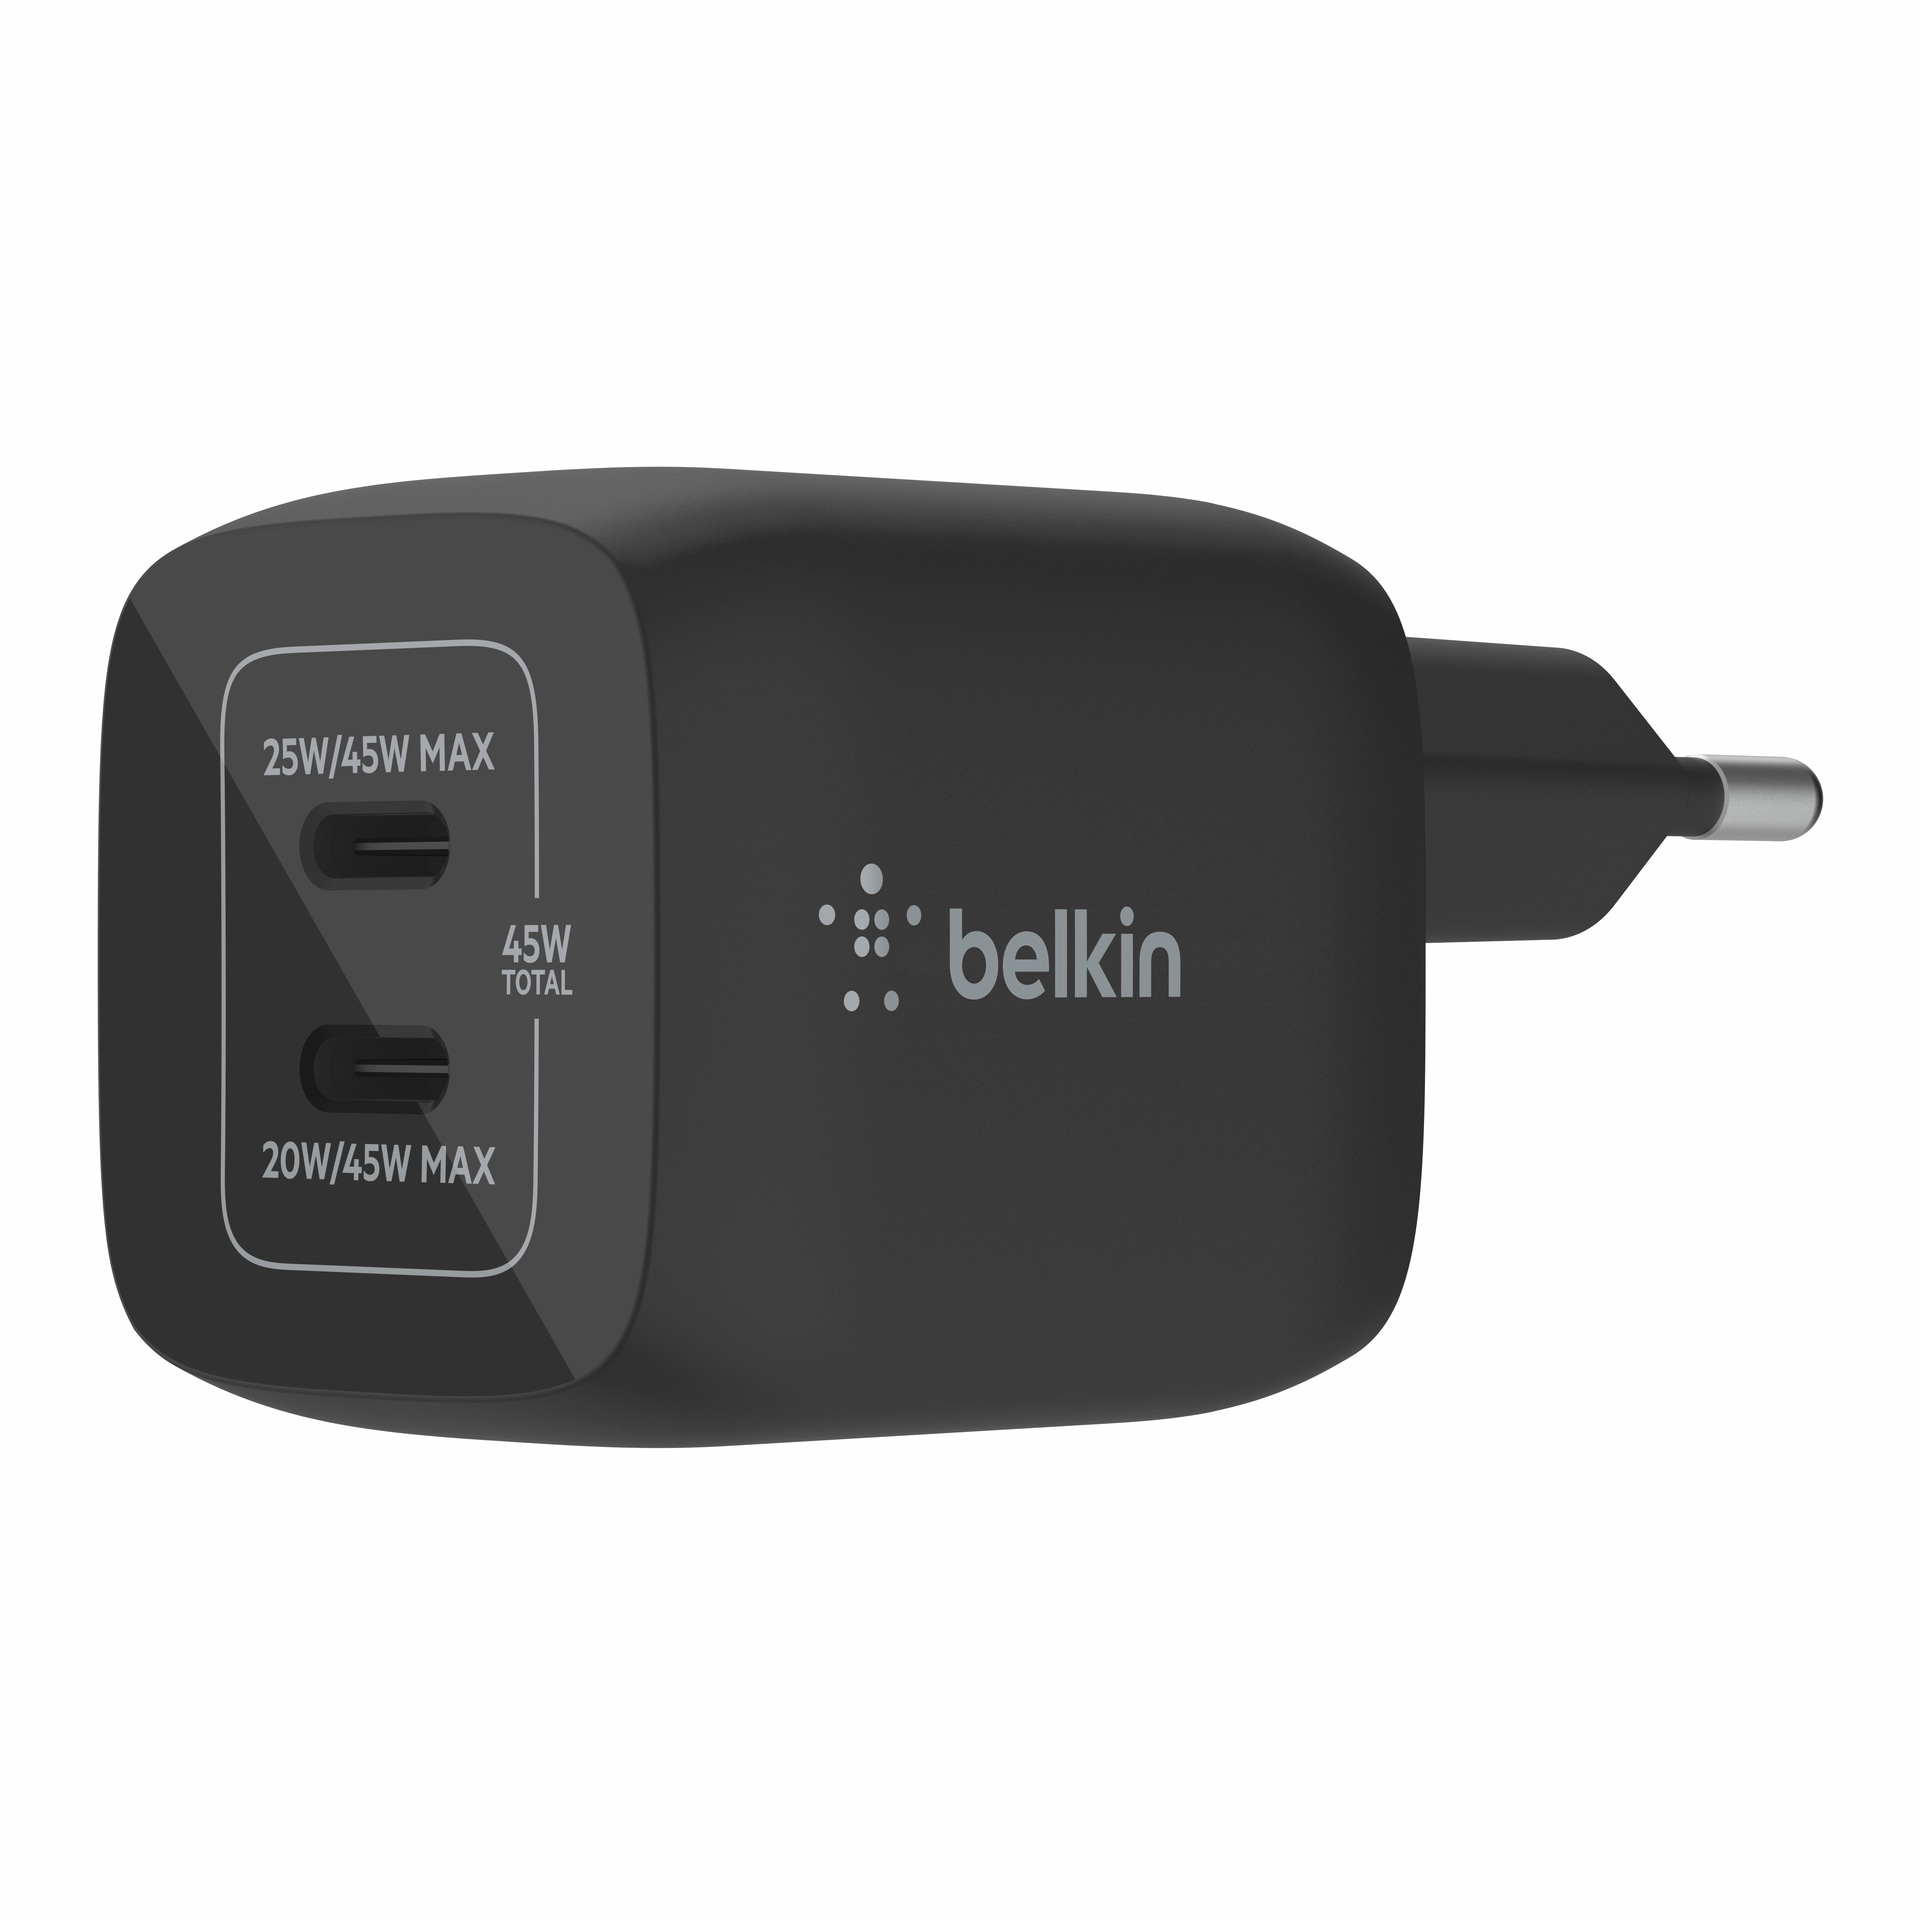 Belkin USB-Ladegerät »45W Dual USB-C Pixel Power shoppen iPhone Google Deliver, für online bei GaN Galaxy Ladegerät PPS«, Apple Samsung OTTO